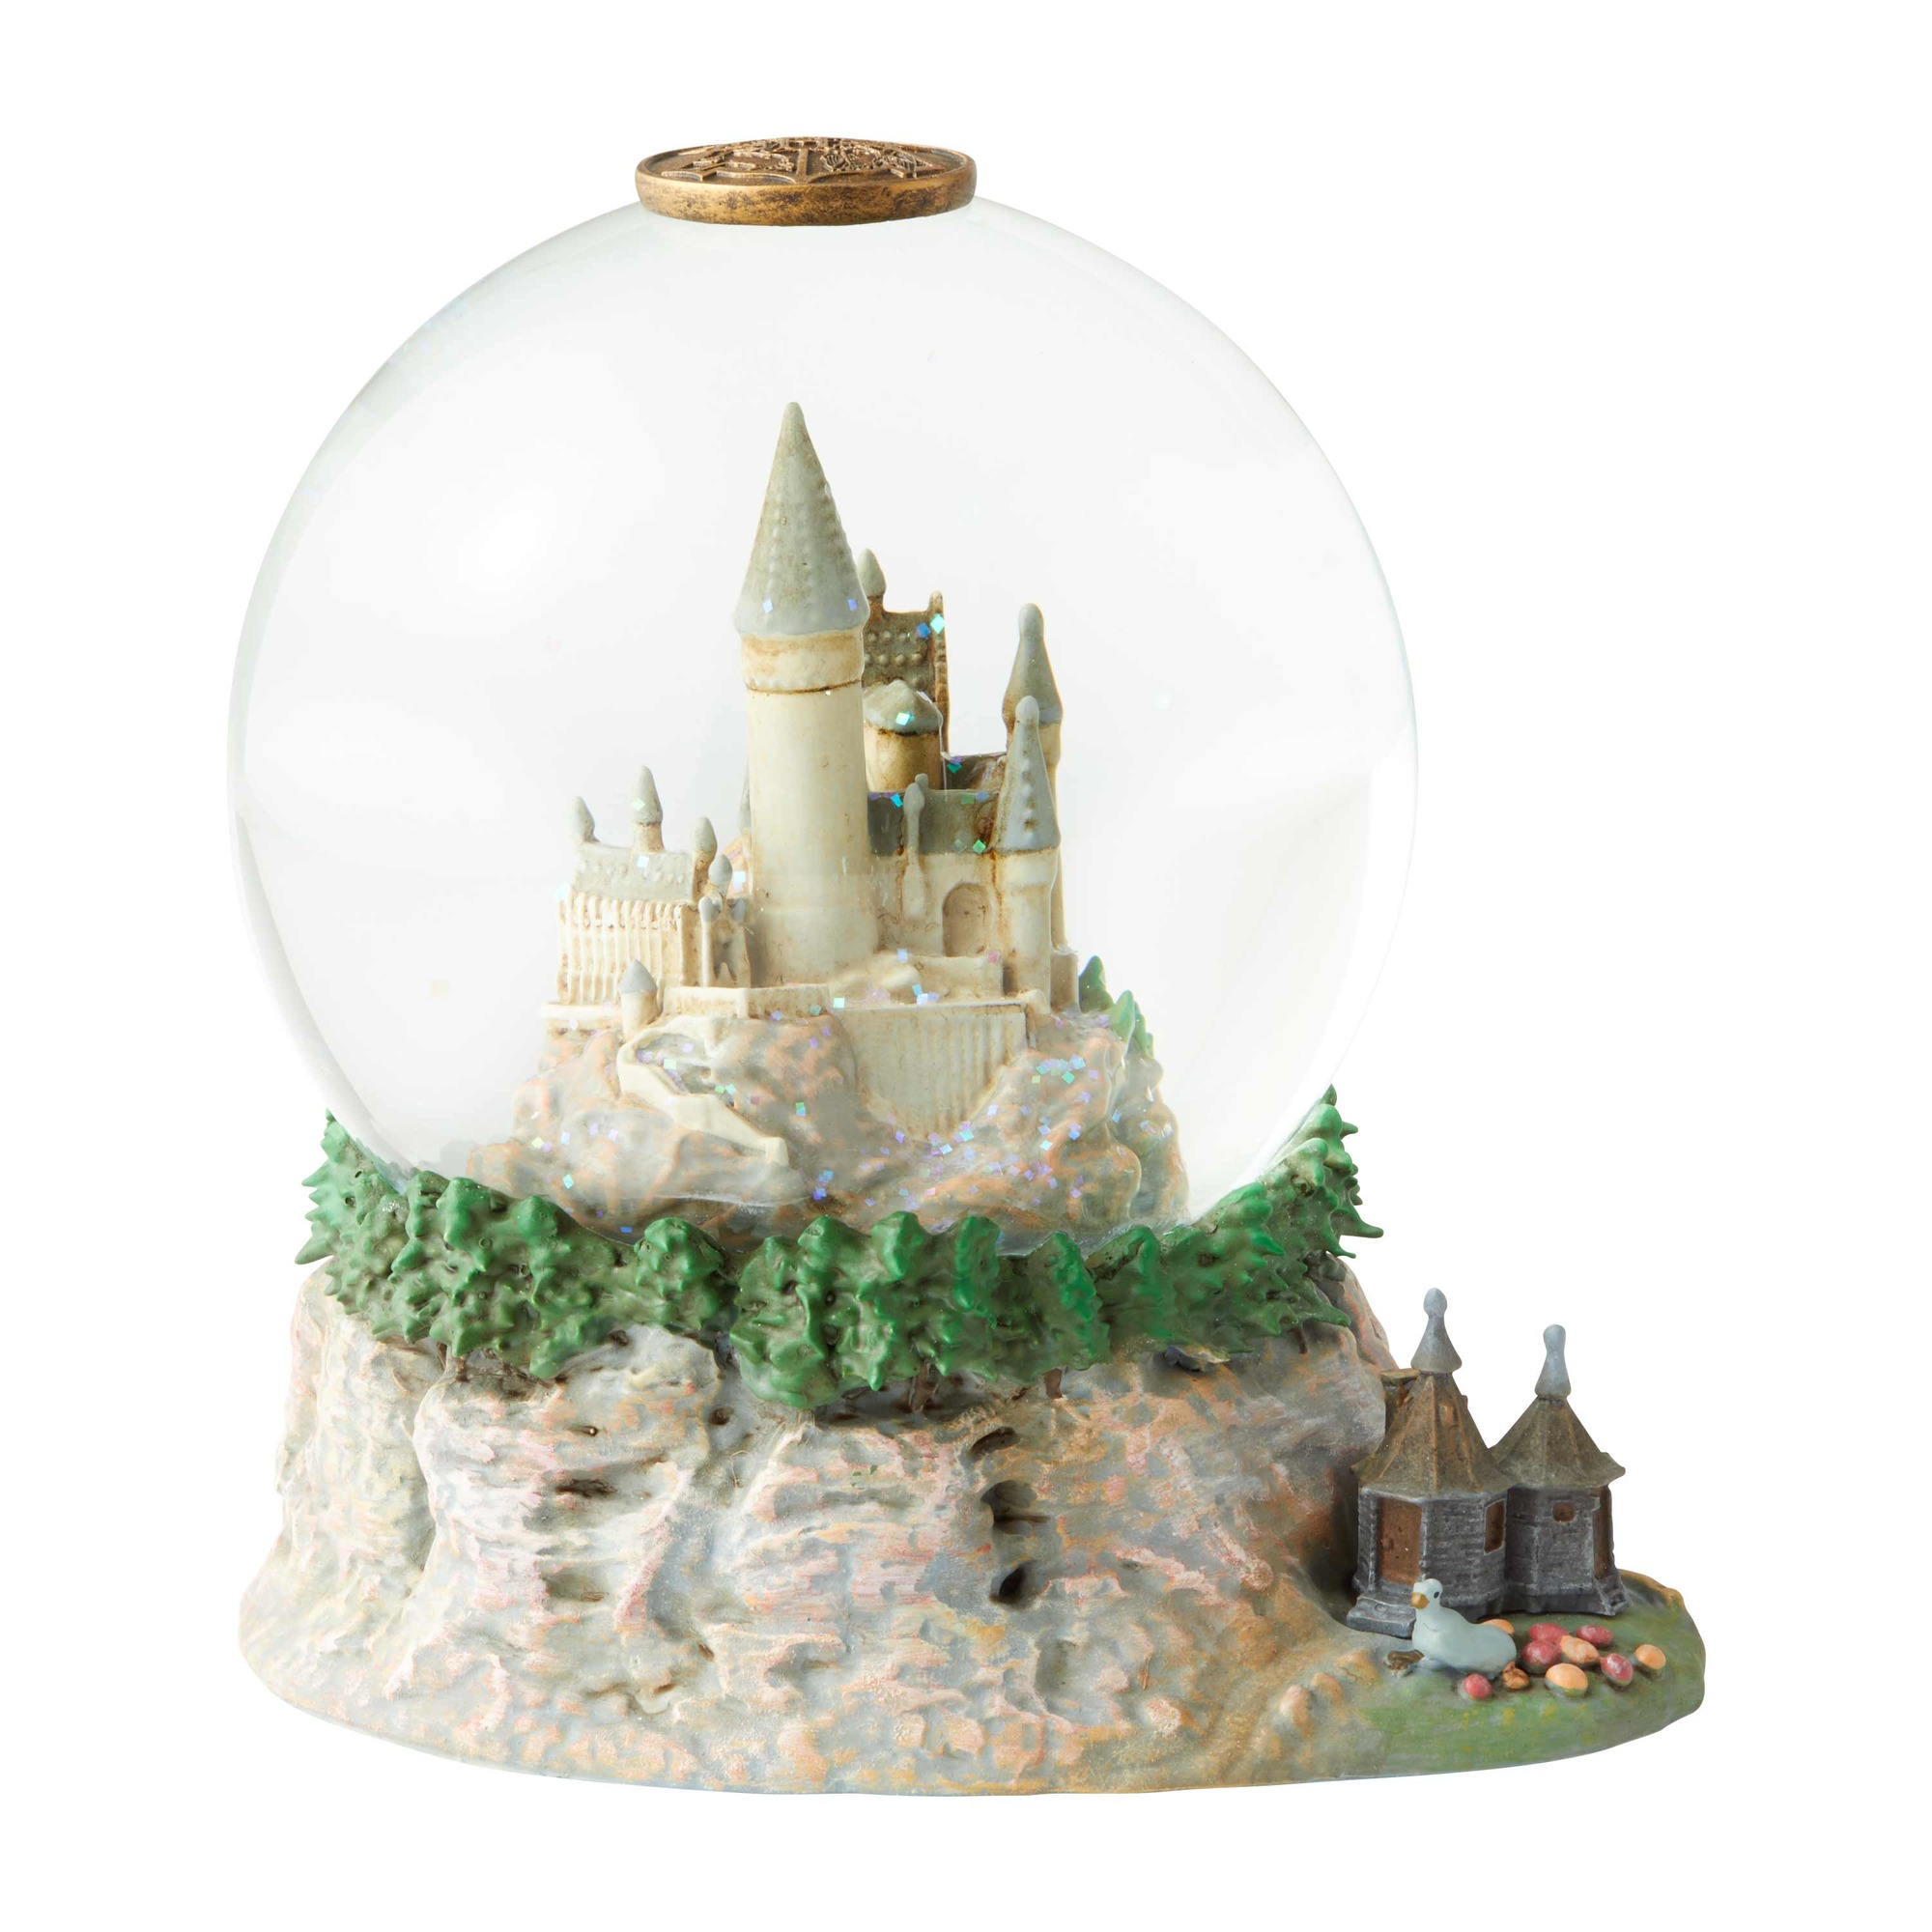 Harry Potter Hogwarts Express 3D Model Puzzle Kit